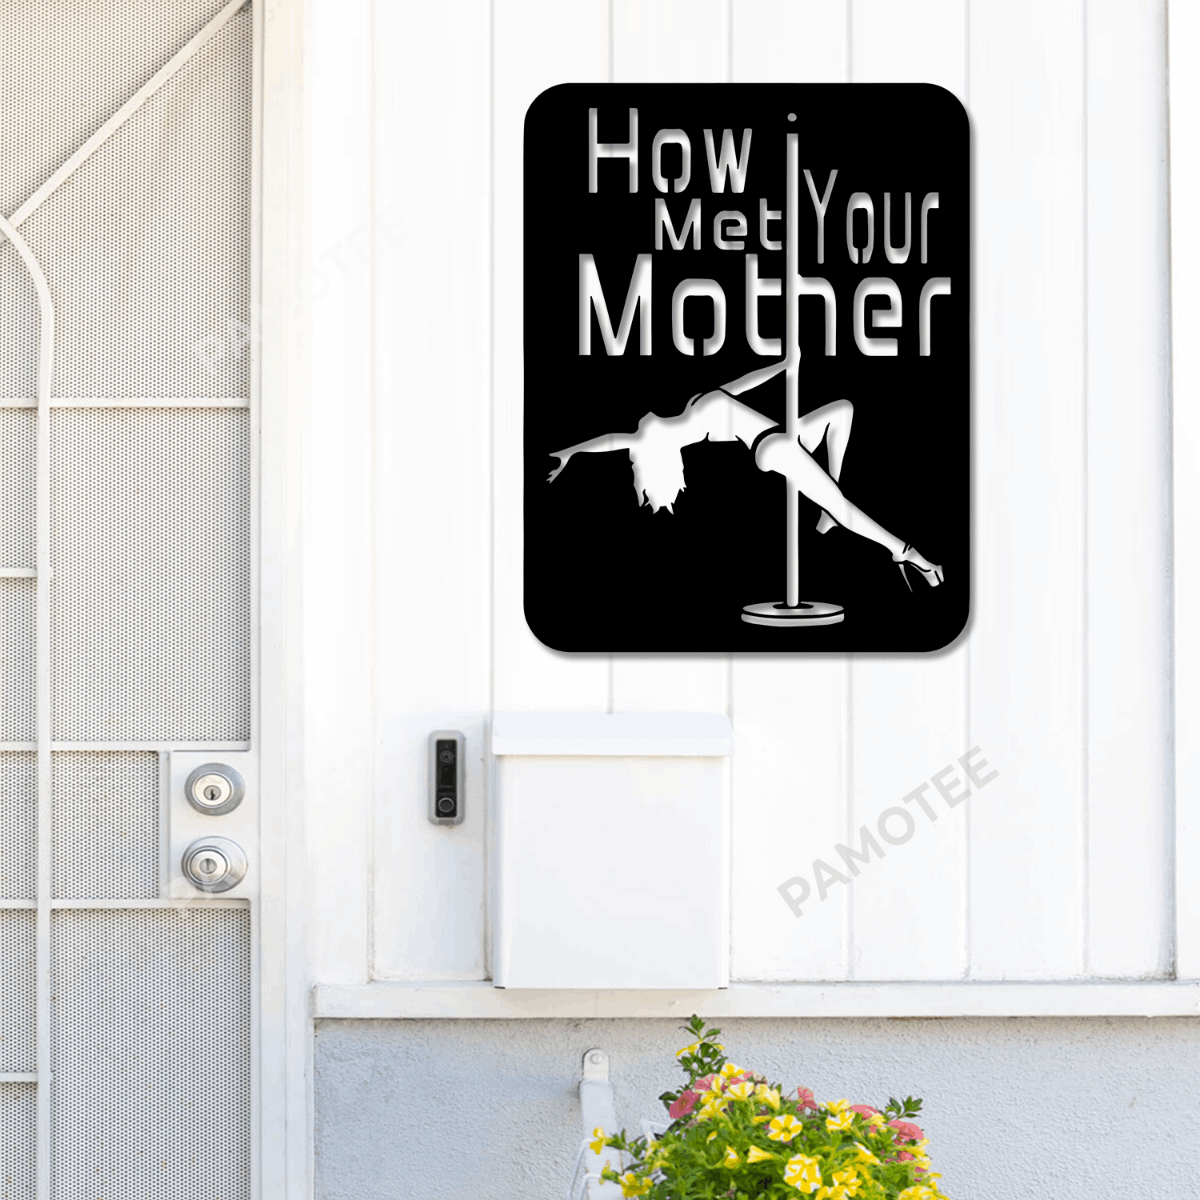 How I Met Your Mother Metal Artwork, Pole Dancing Wall Art Decor, Funny Outdoor Metal Sign